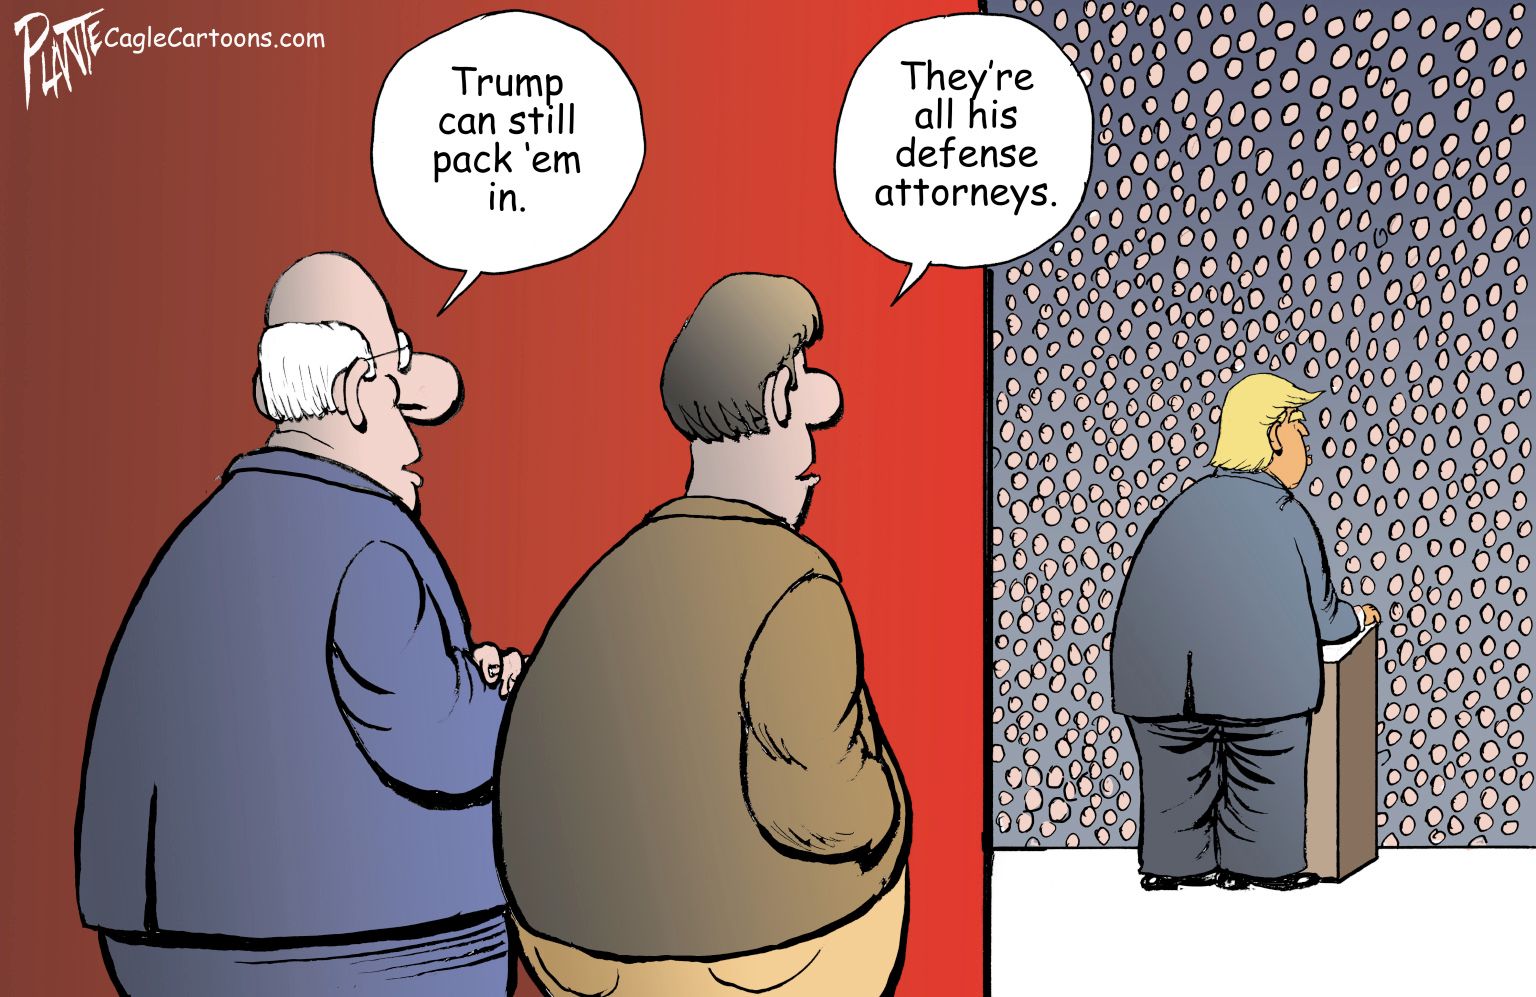 newsjustin.press - Trump can still pack 'em in by Bruce Plante, PoliticalCartoons.com